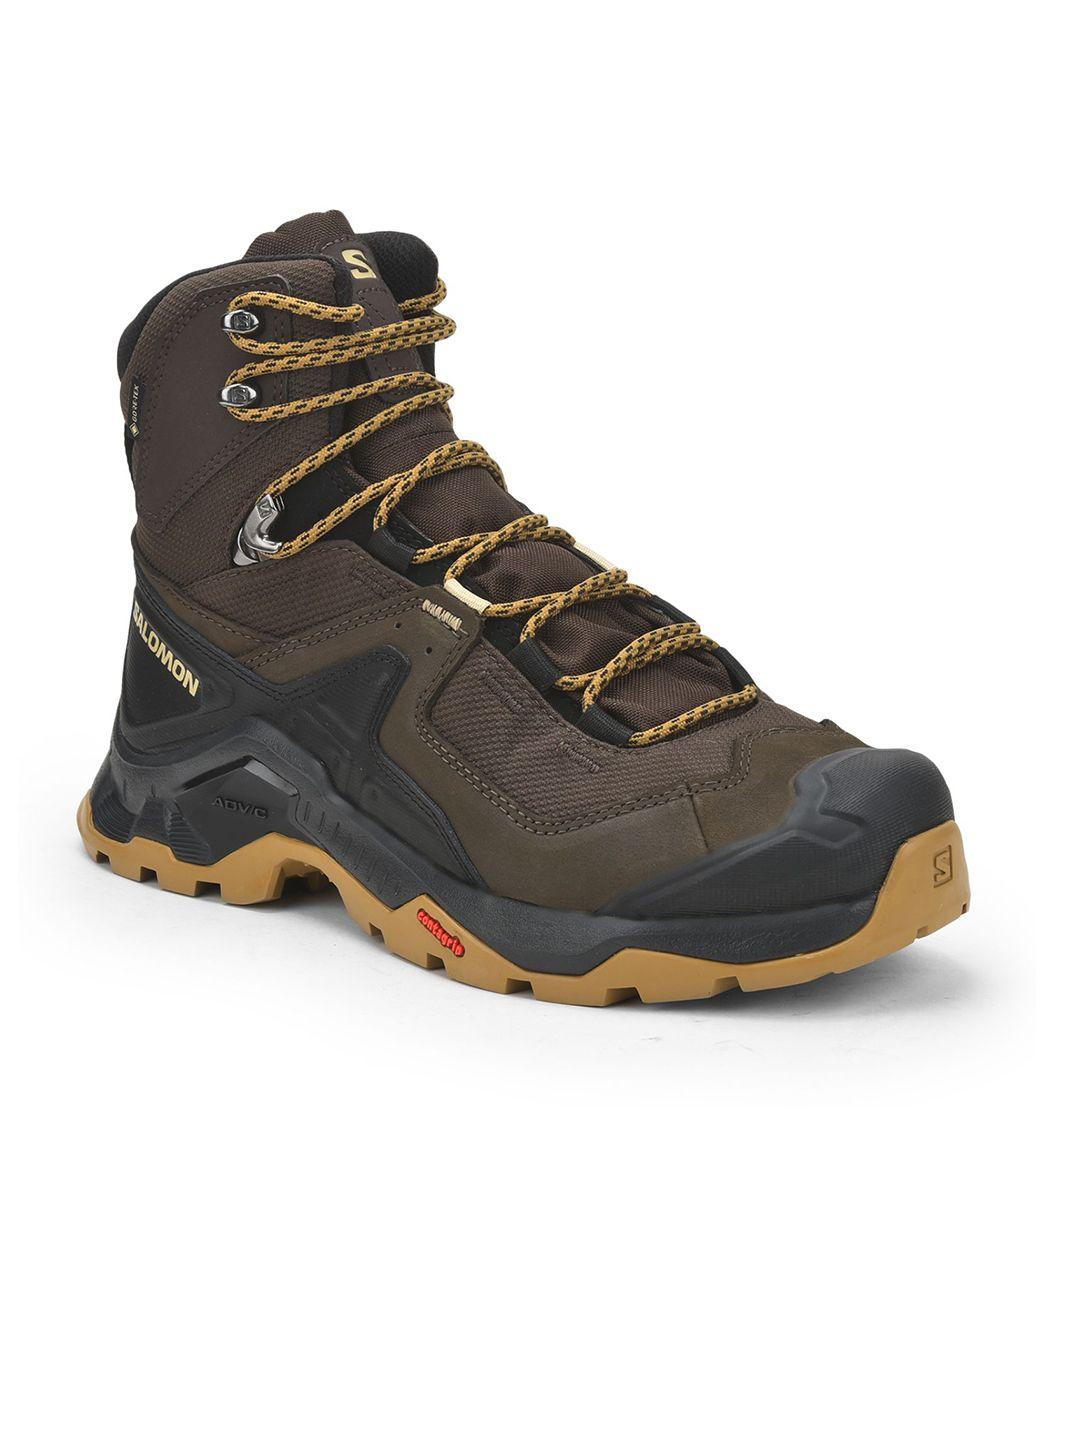 Salomon Men Brown Leather Trekking Shoes